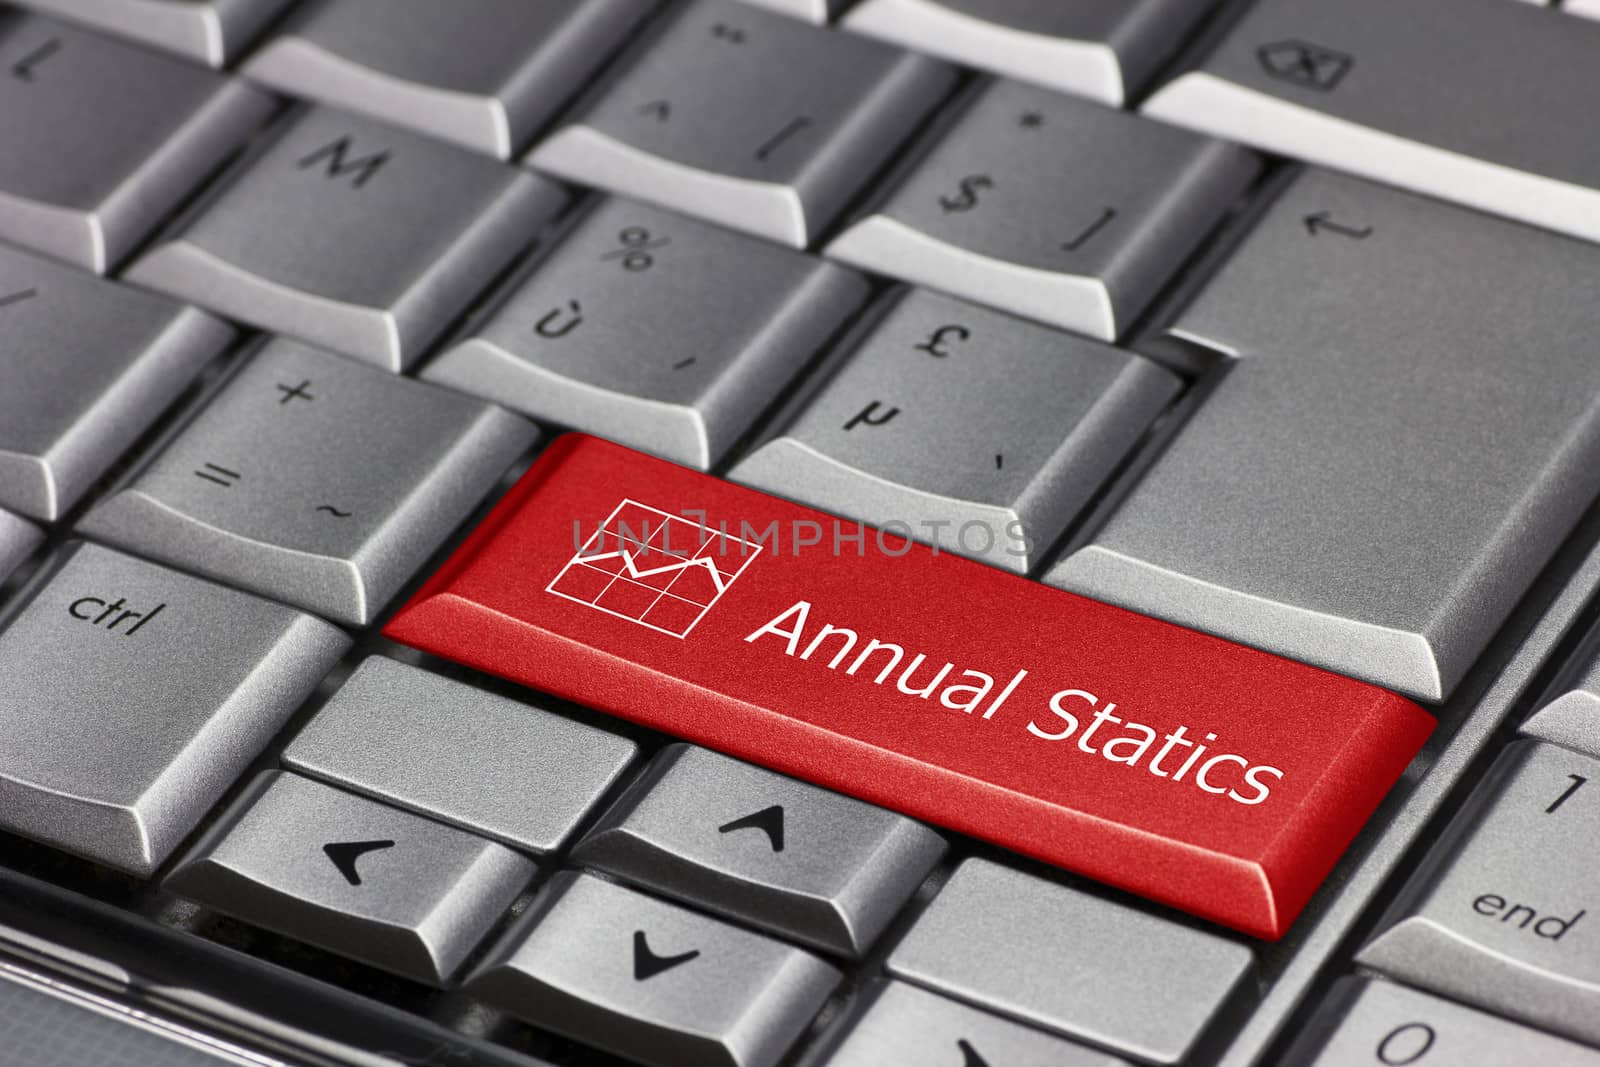 Coputer key - Annual Statistics